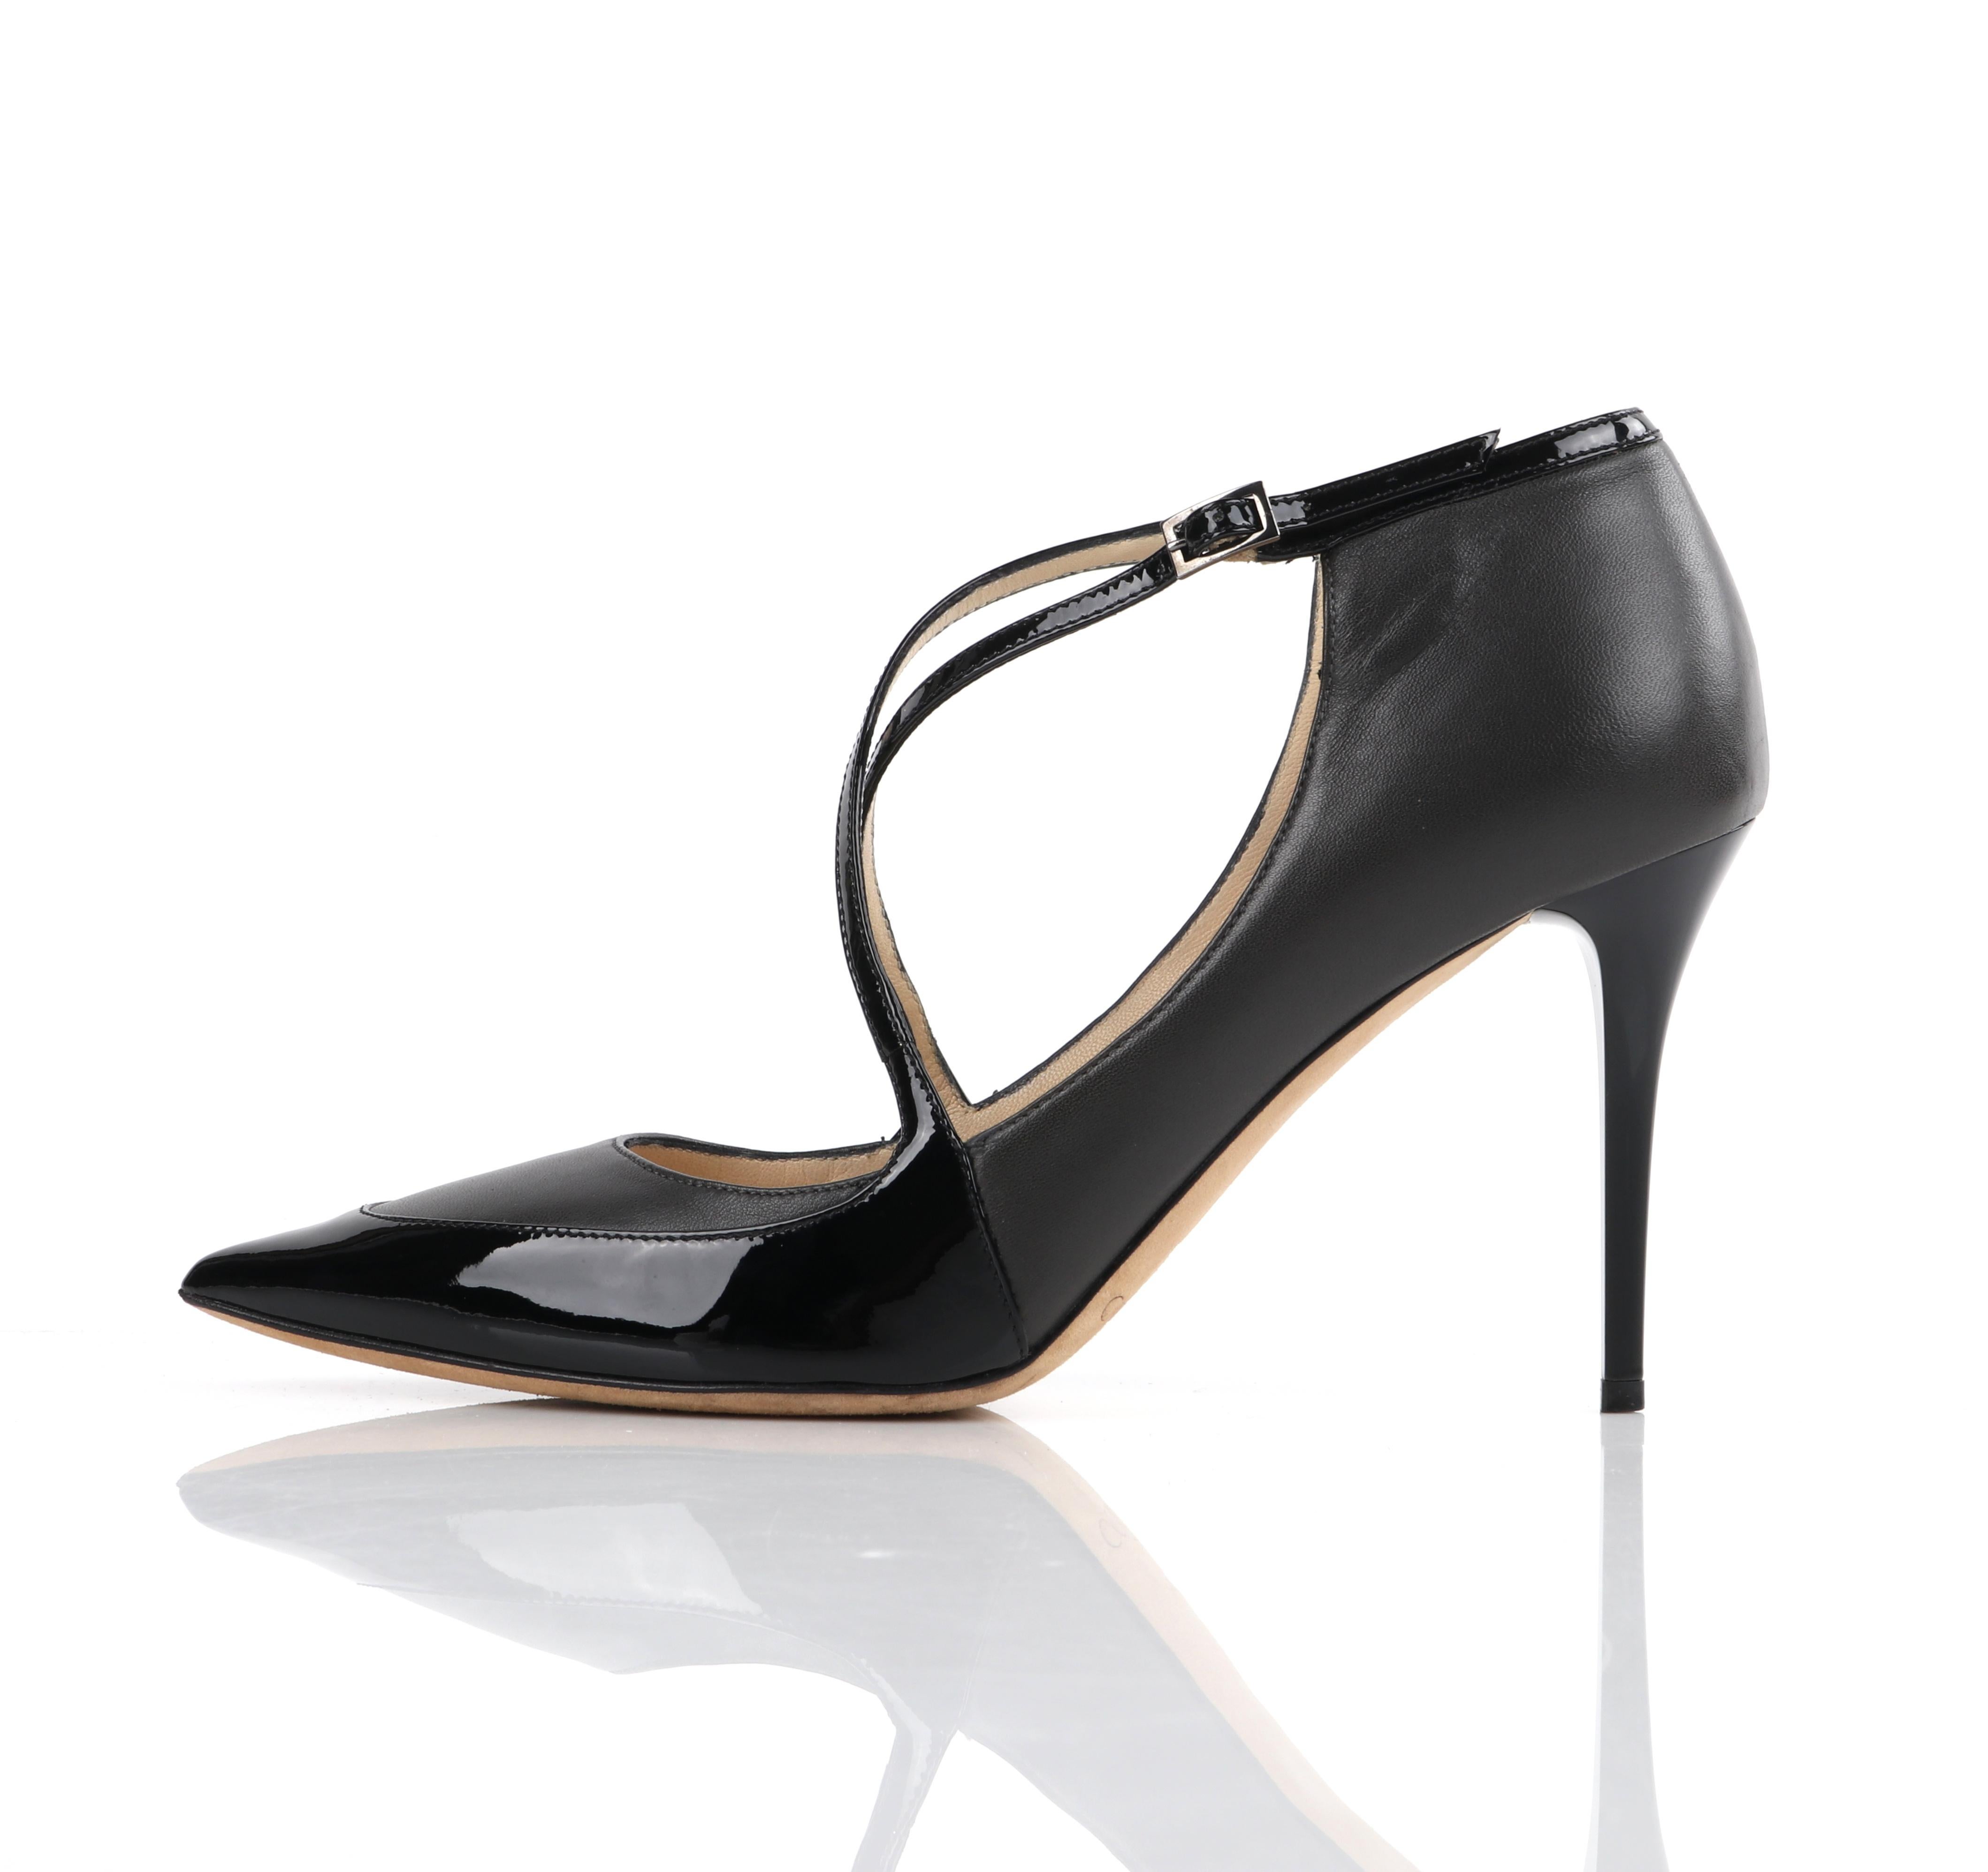 gray leather heels